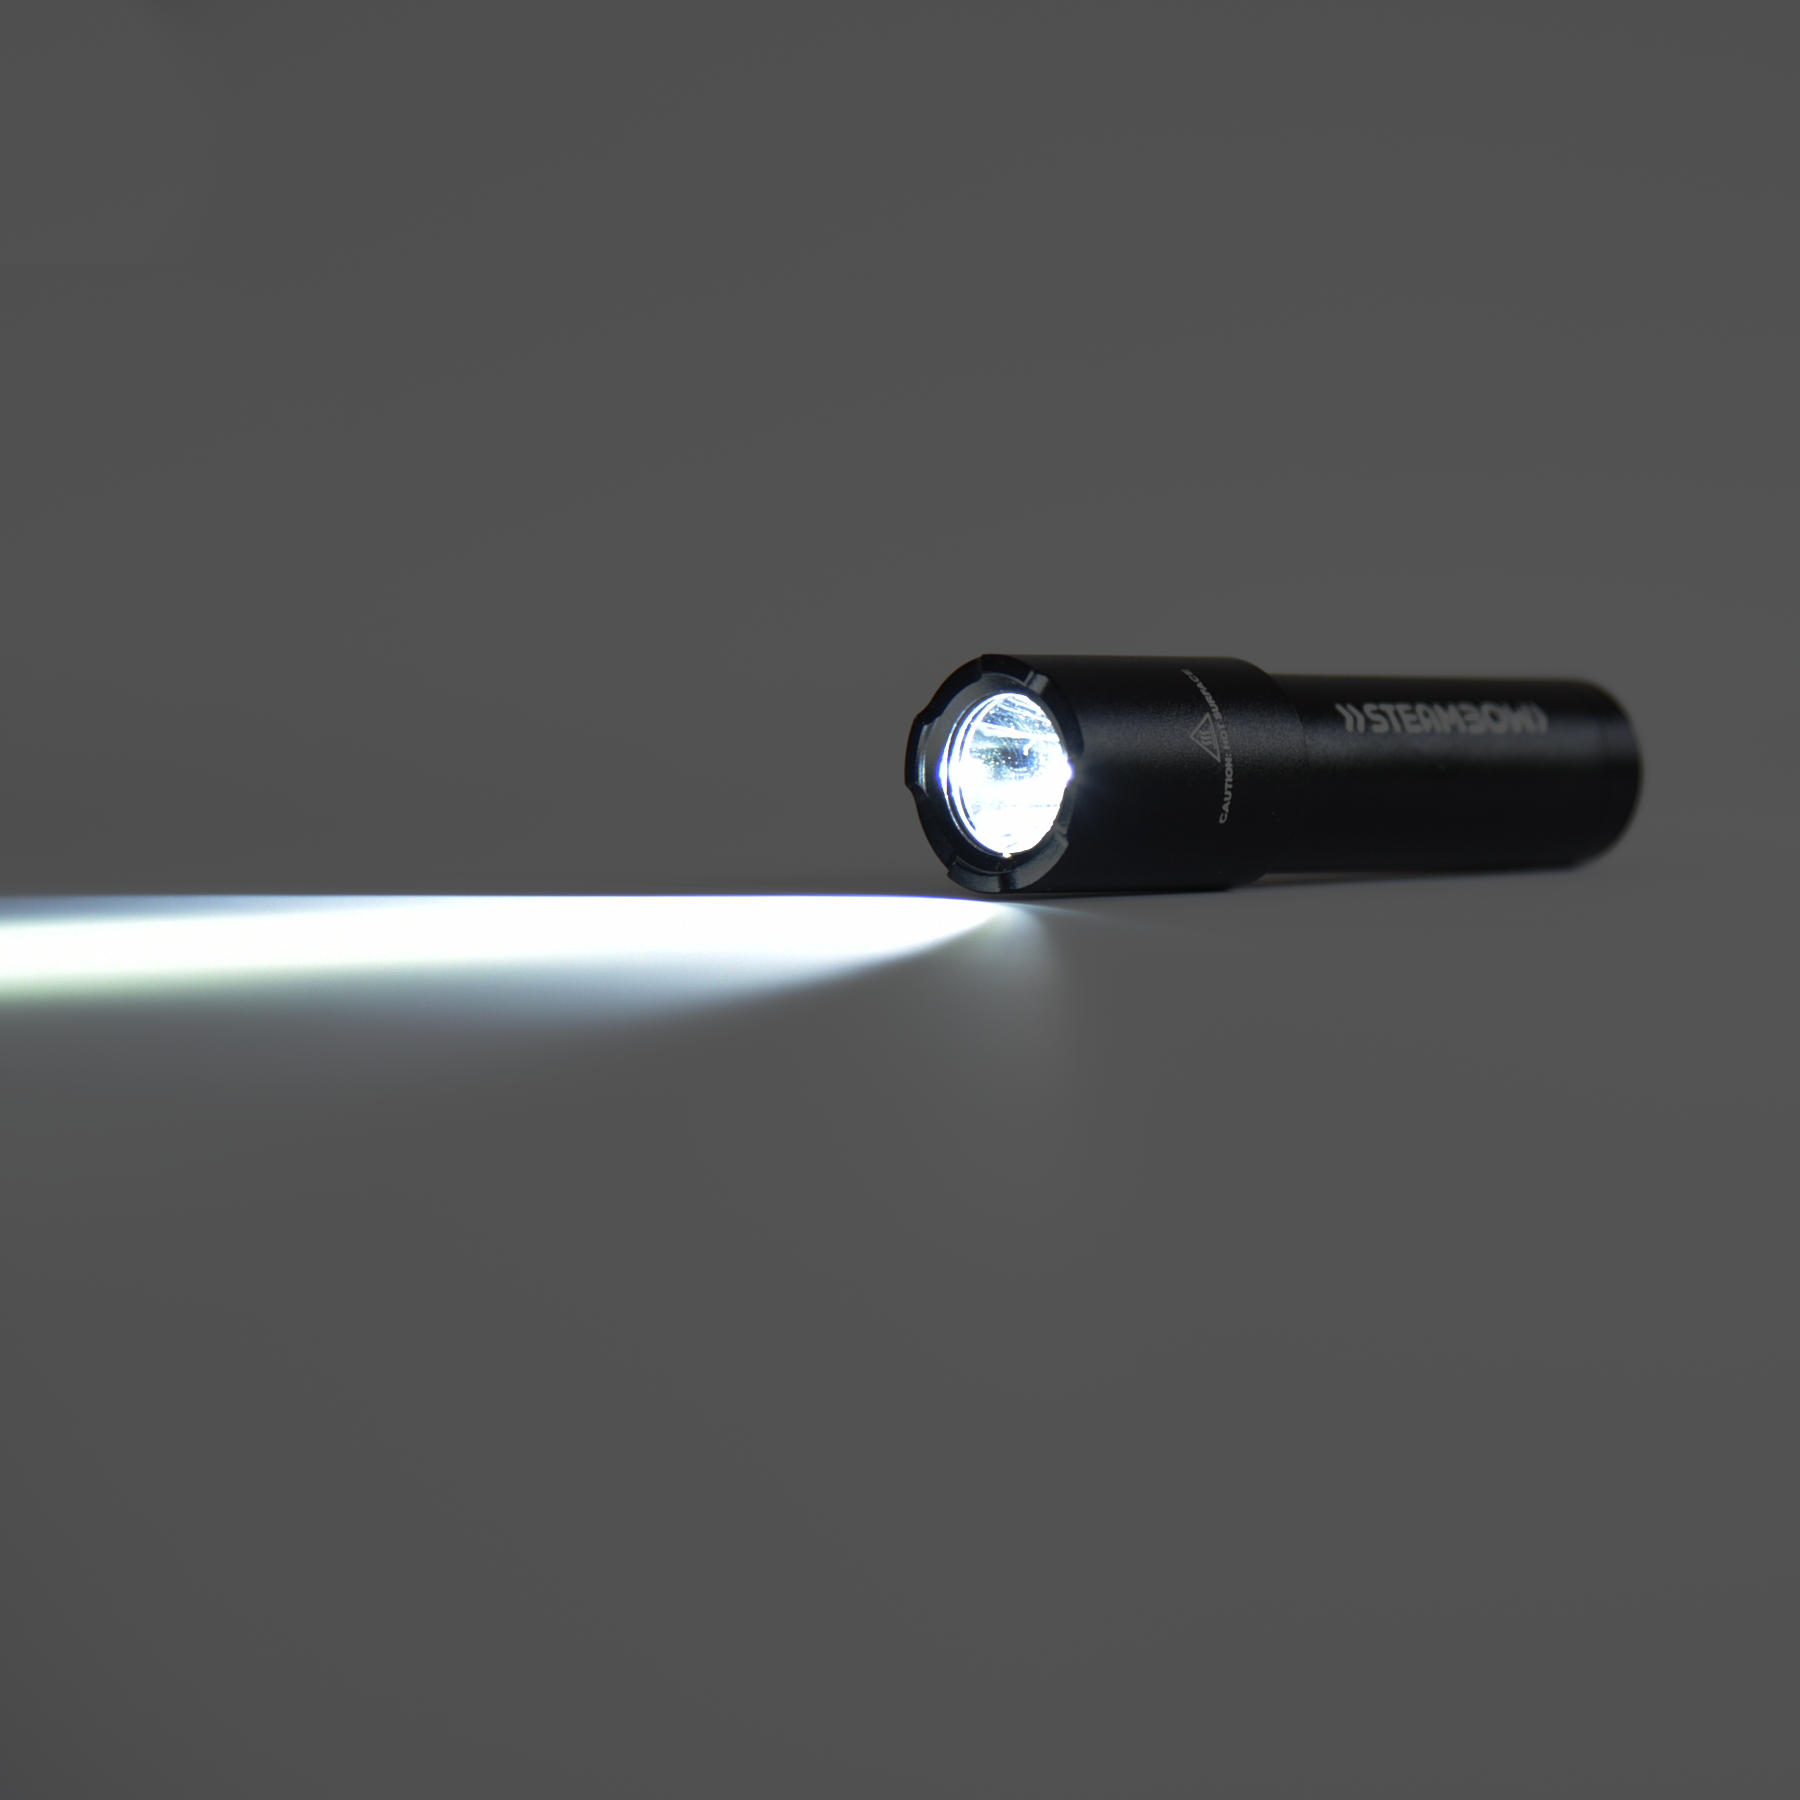 Steambow flashlight